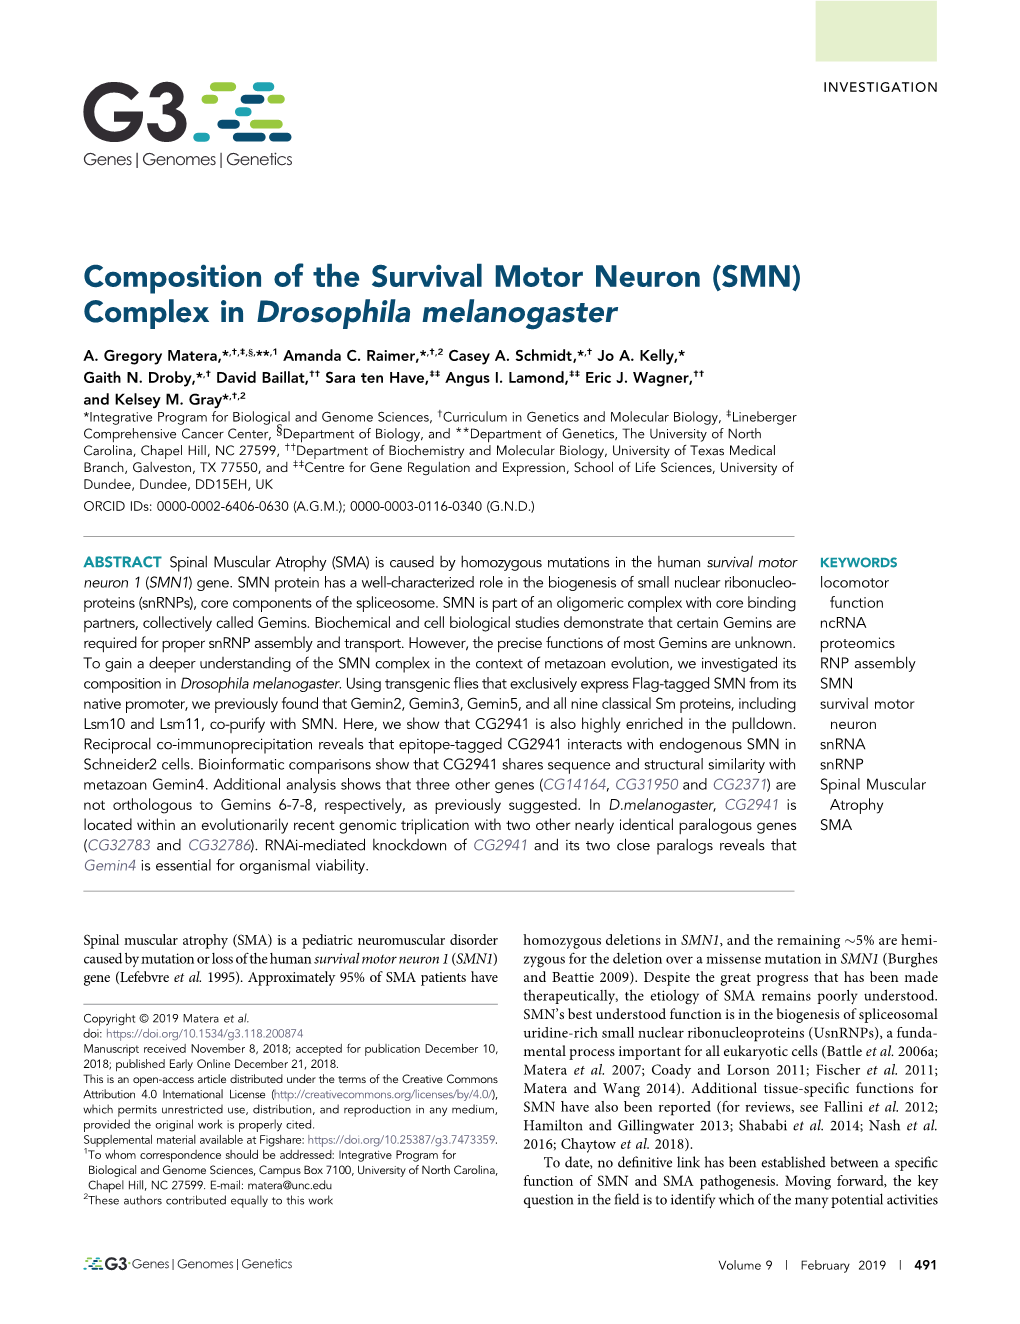 Composition of the Survival Motor Neuron (SMN) Complex in Drosophila Melanogaster